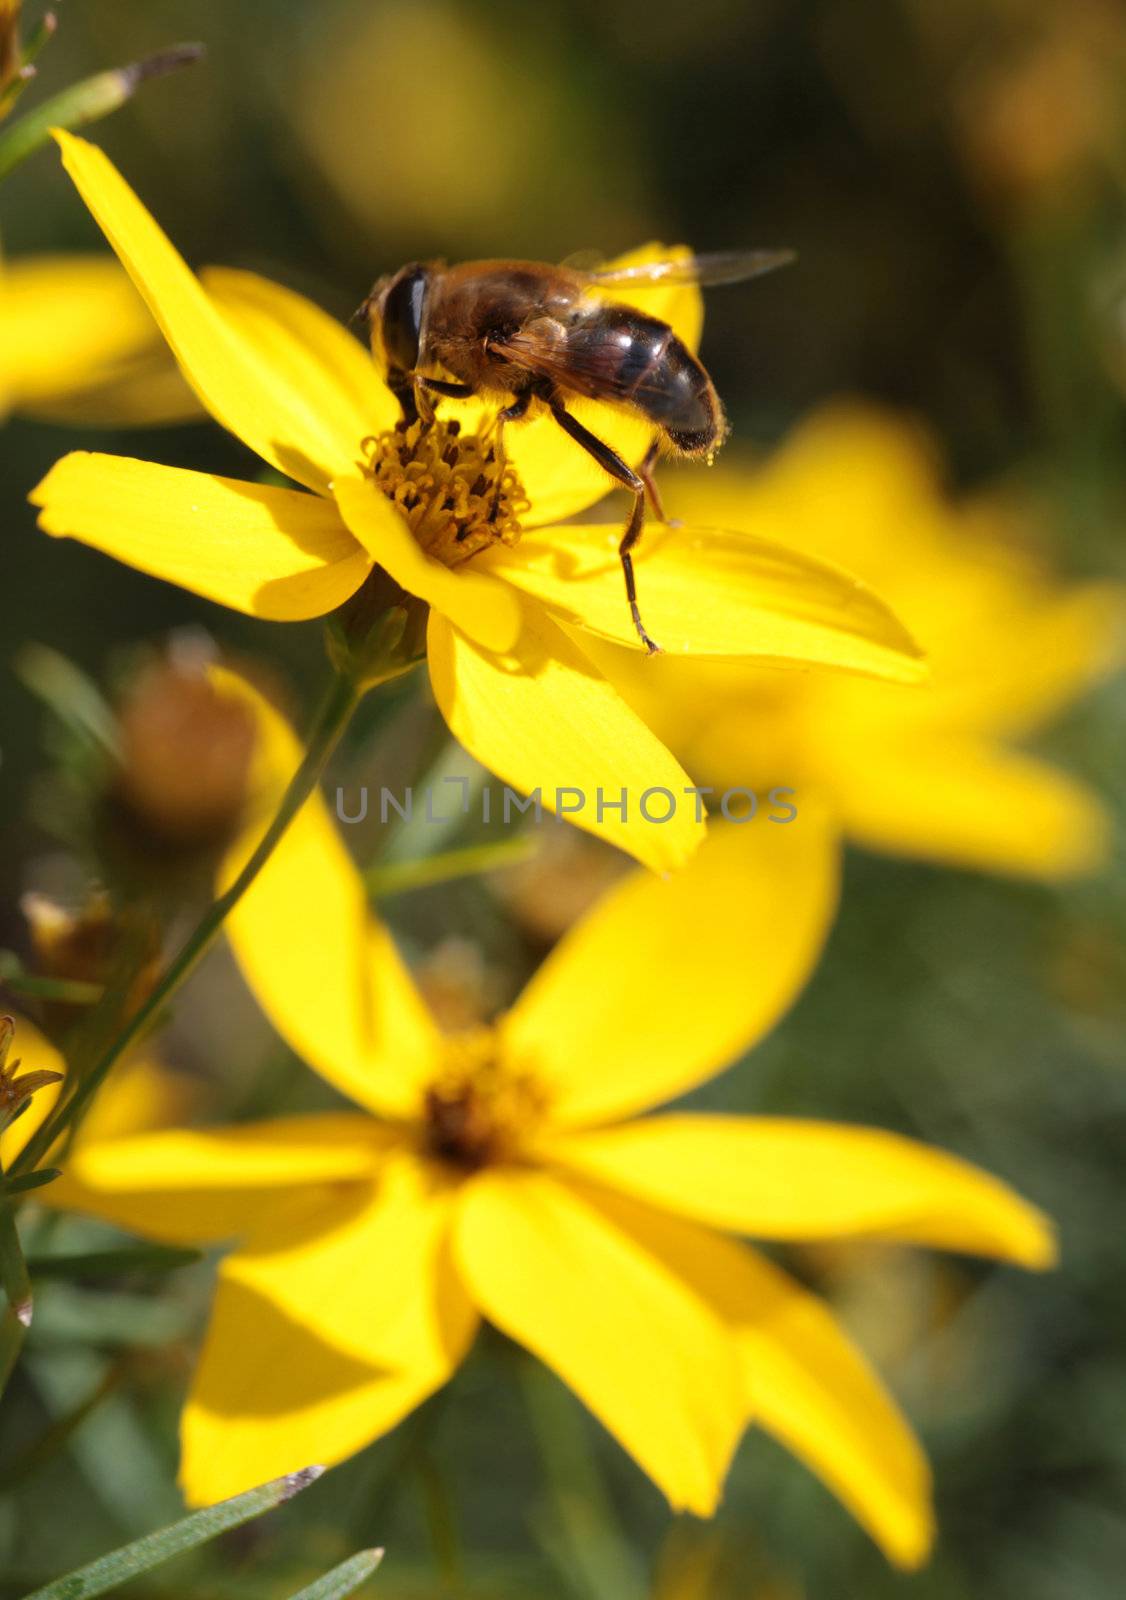 Pollination bee on flower by kaarsten